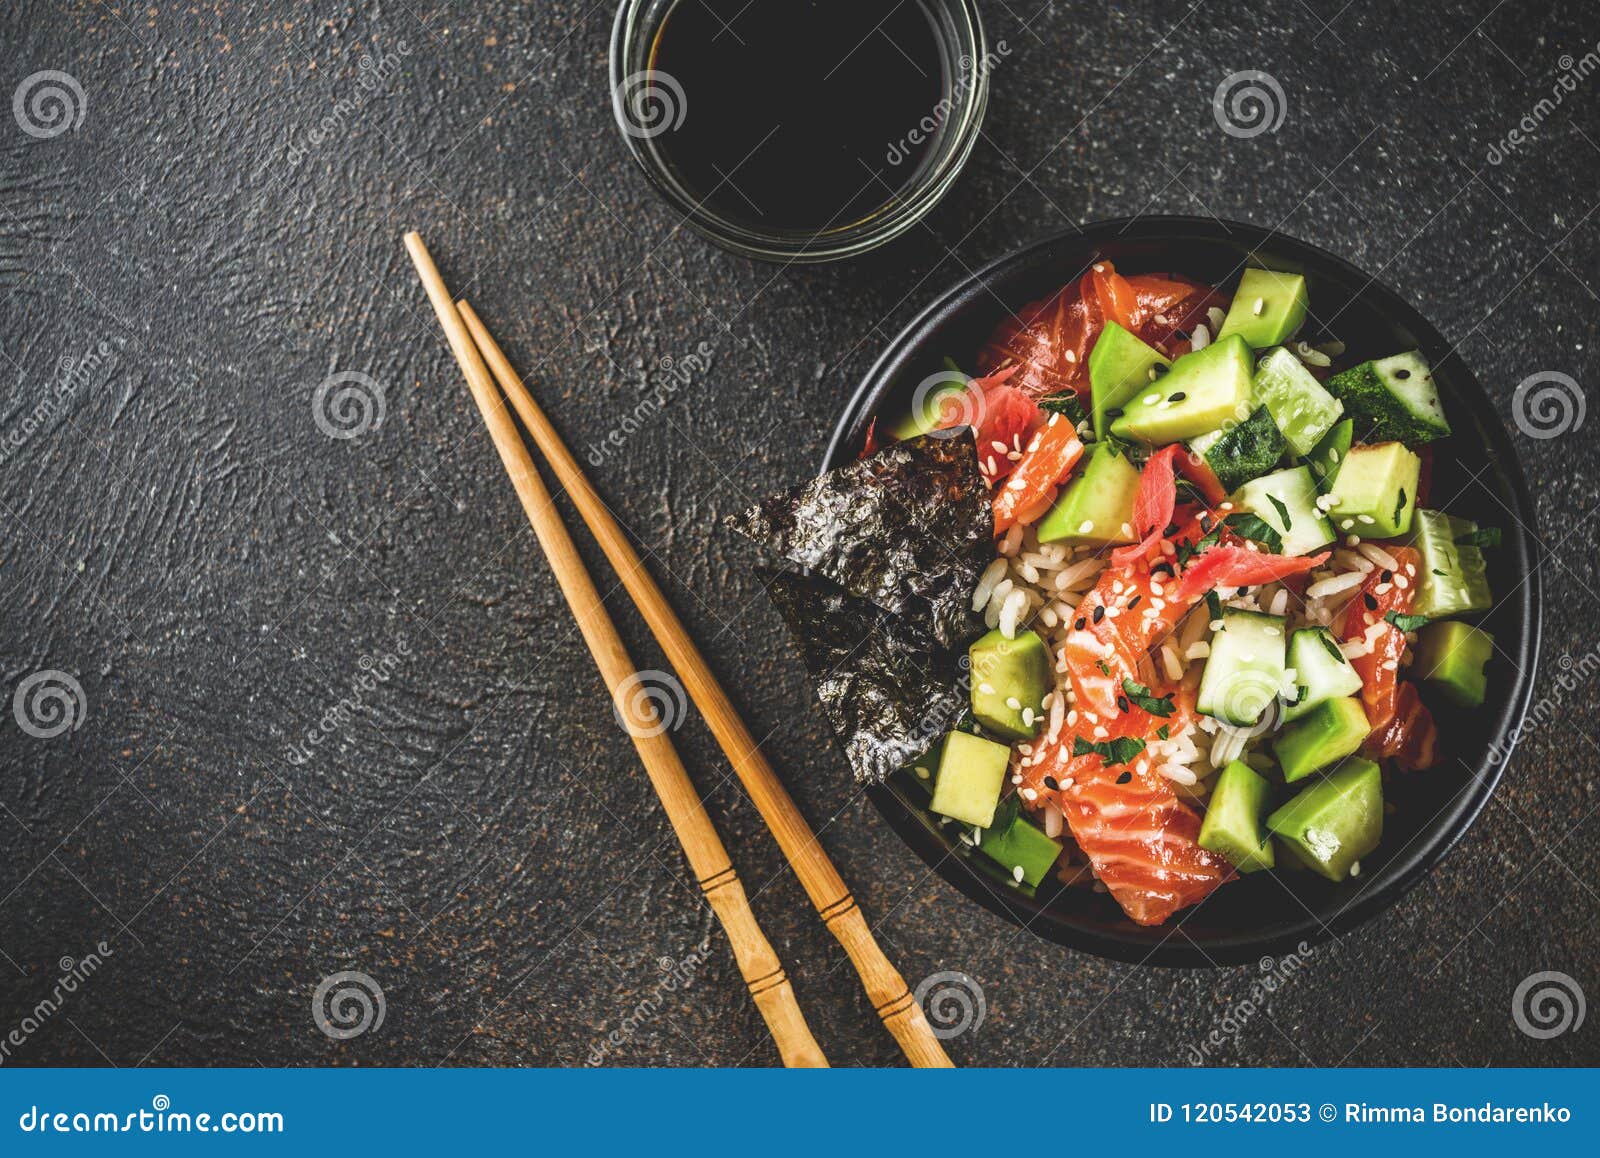 sushi poke bowl